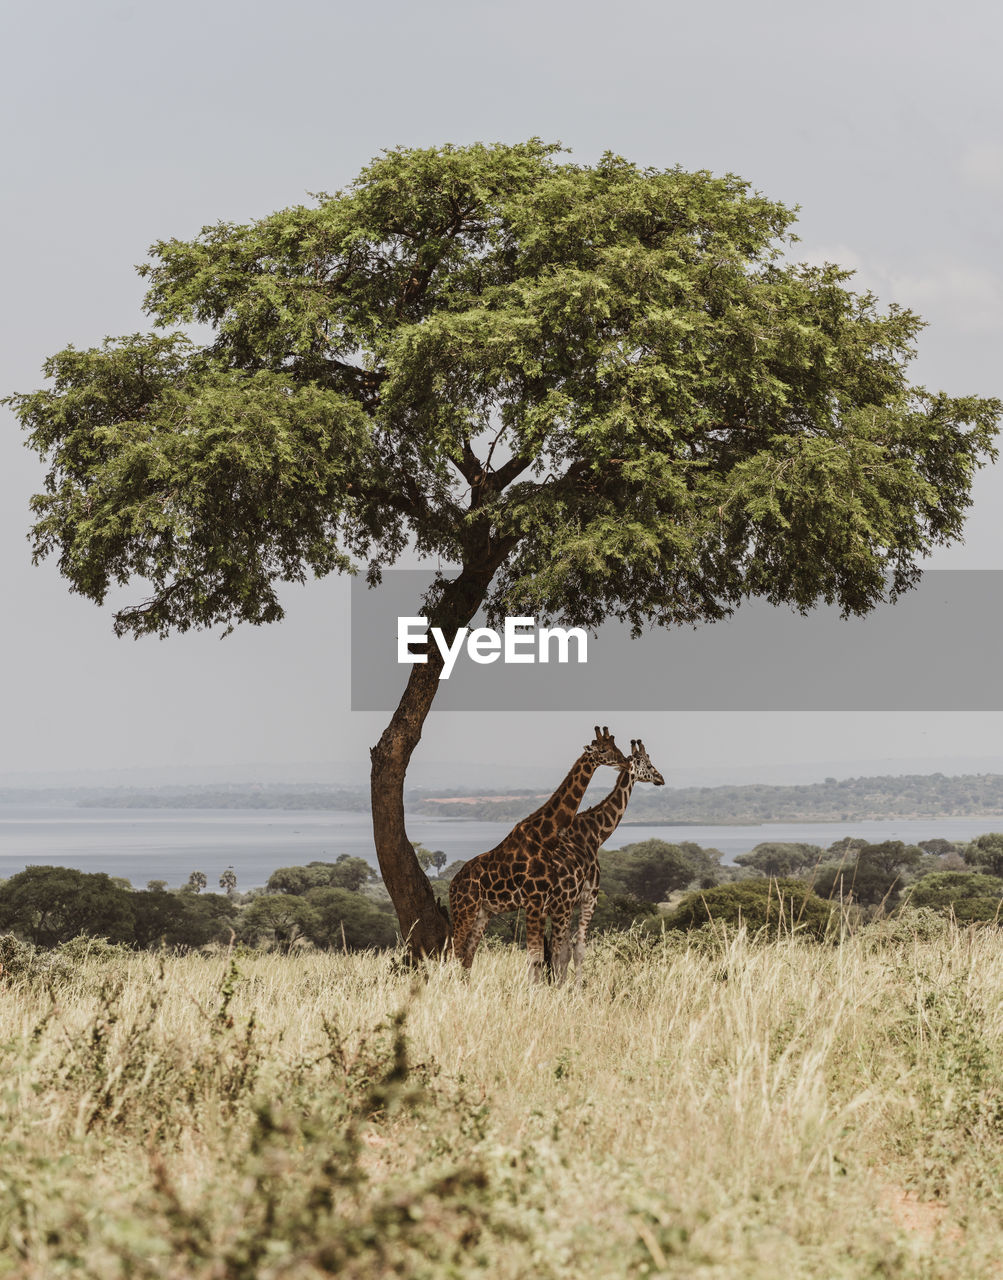 Tree in a field with giraffes 